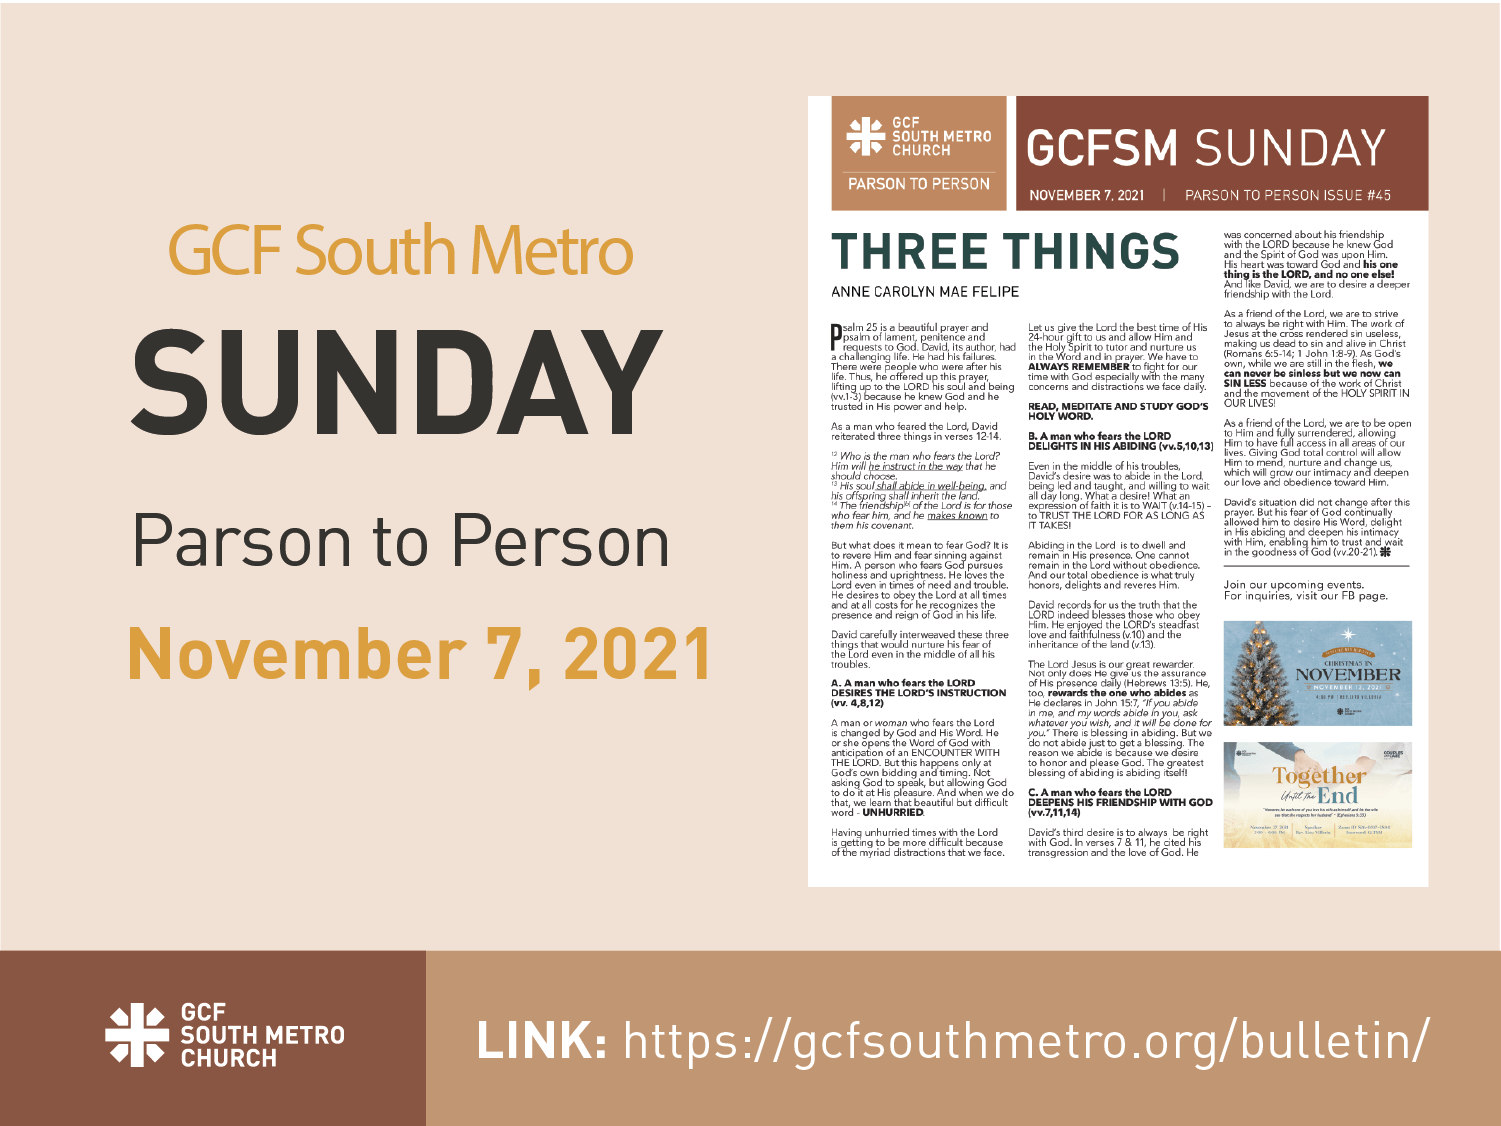 Sunday Bulletin – Parson to Person, November 7, 2021